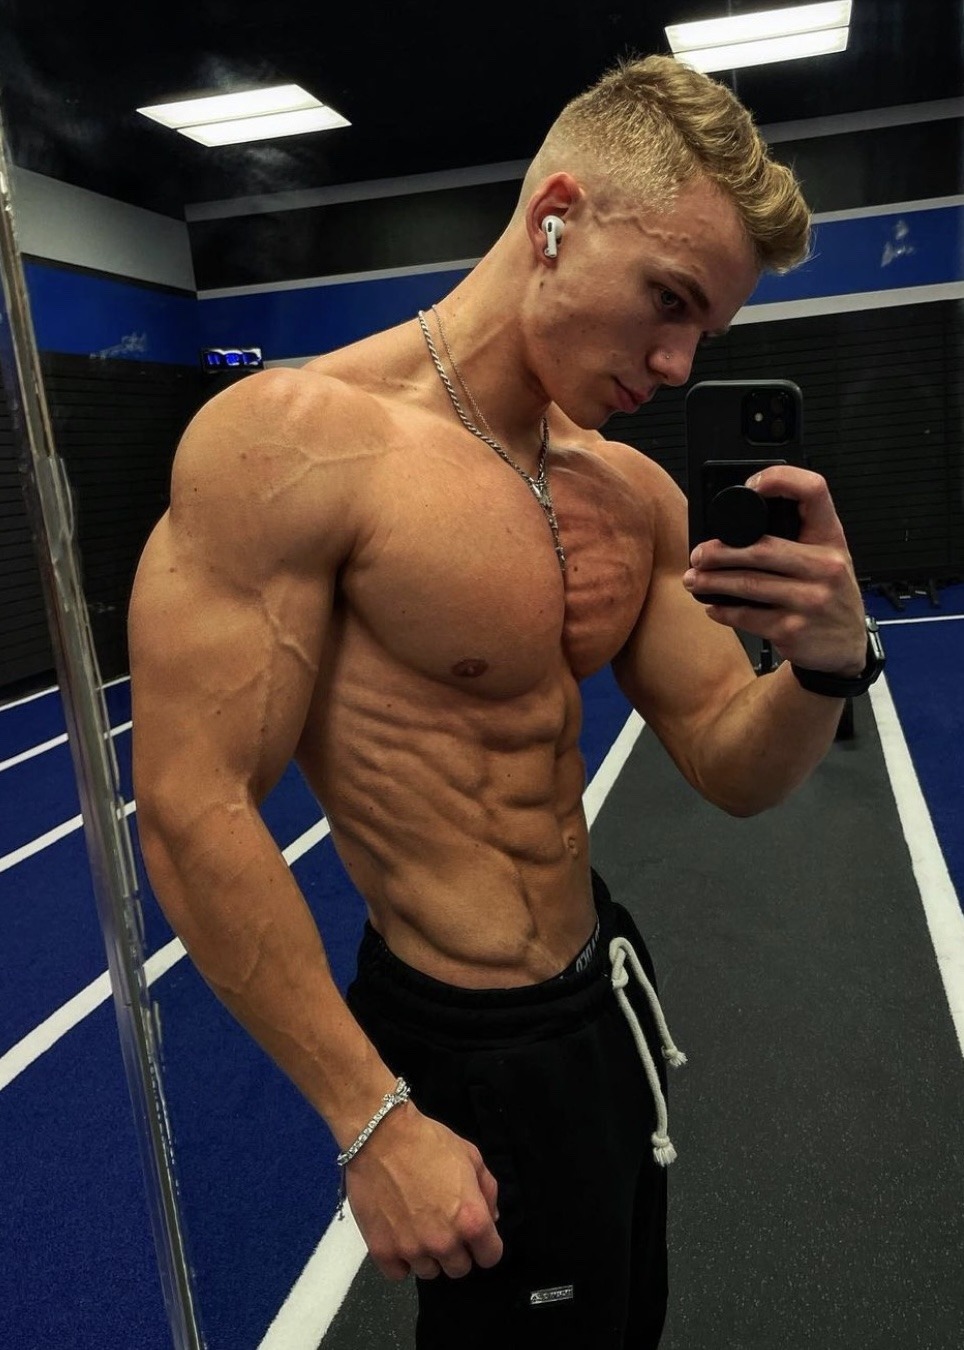 hot-shirtless-shredded-guy-joseph-riser-young-muscle-hunk-selfie